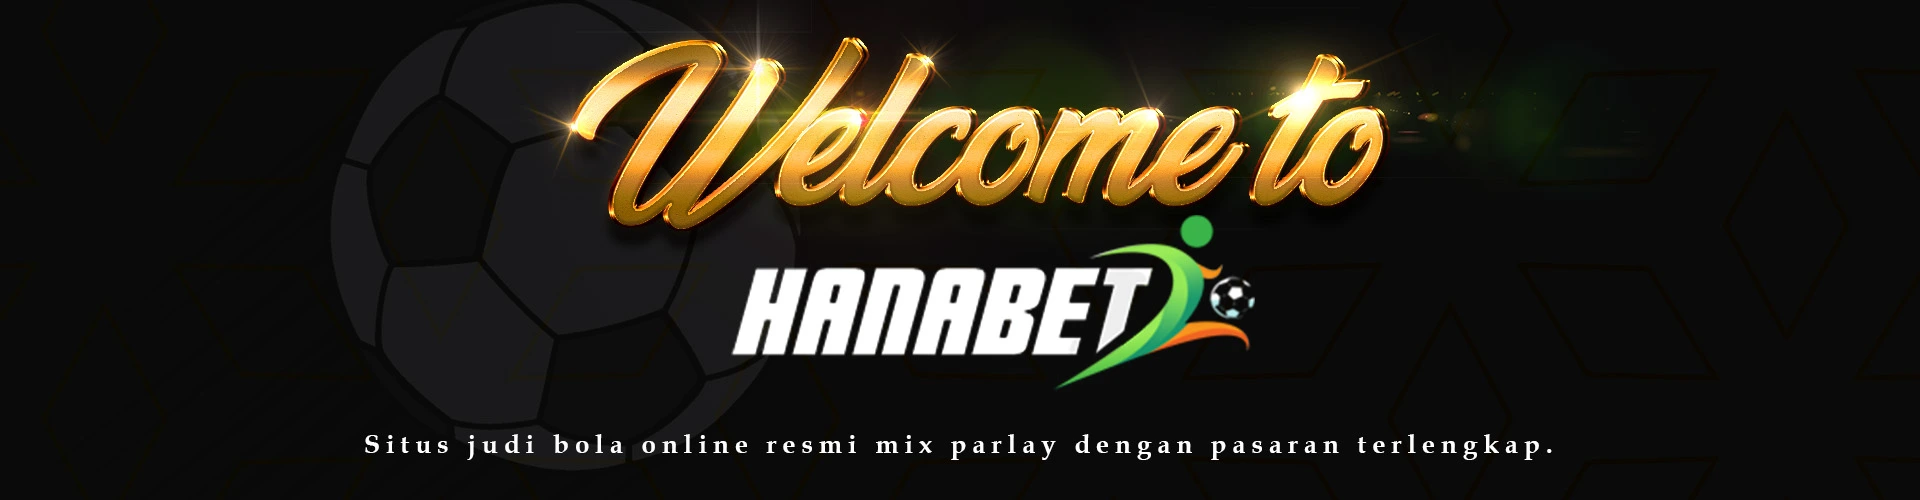 Welcome hanabet2